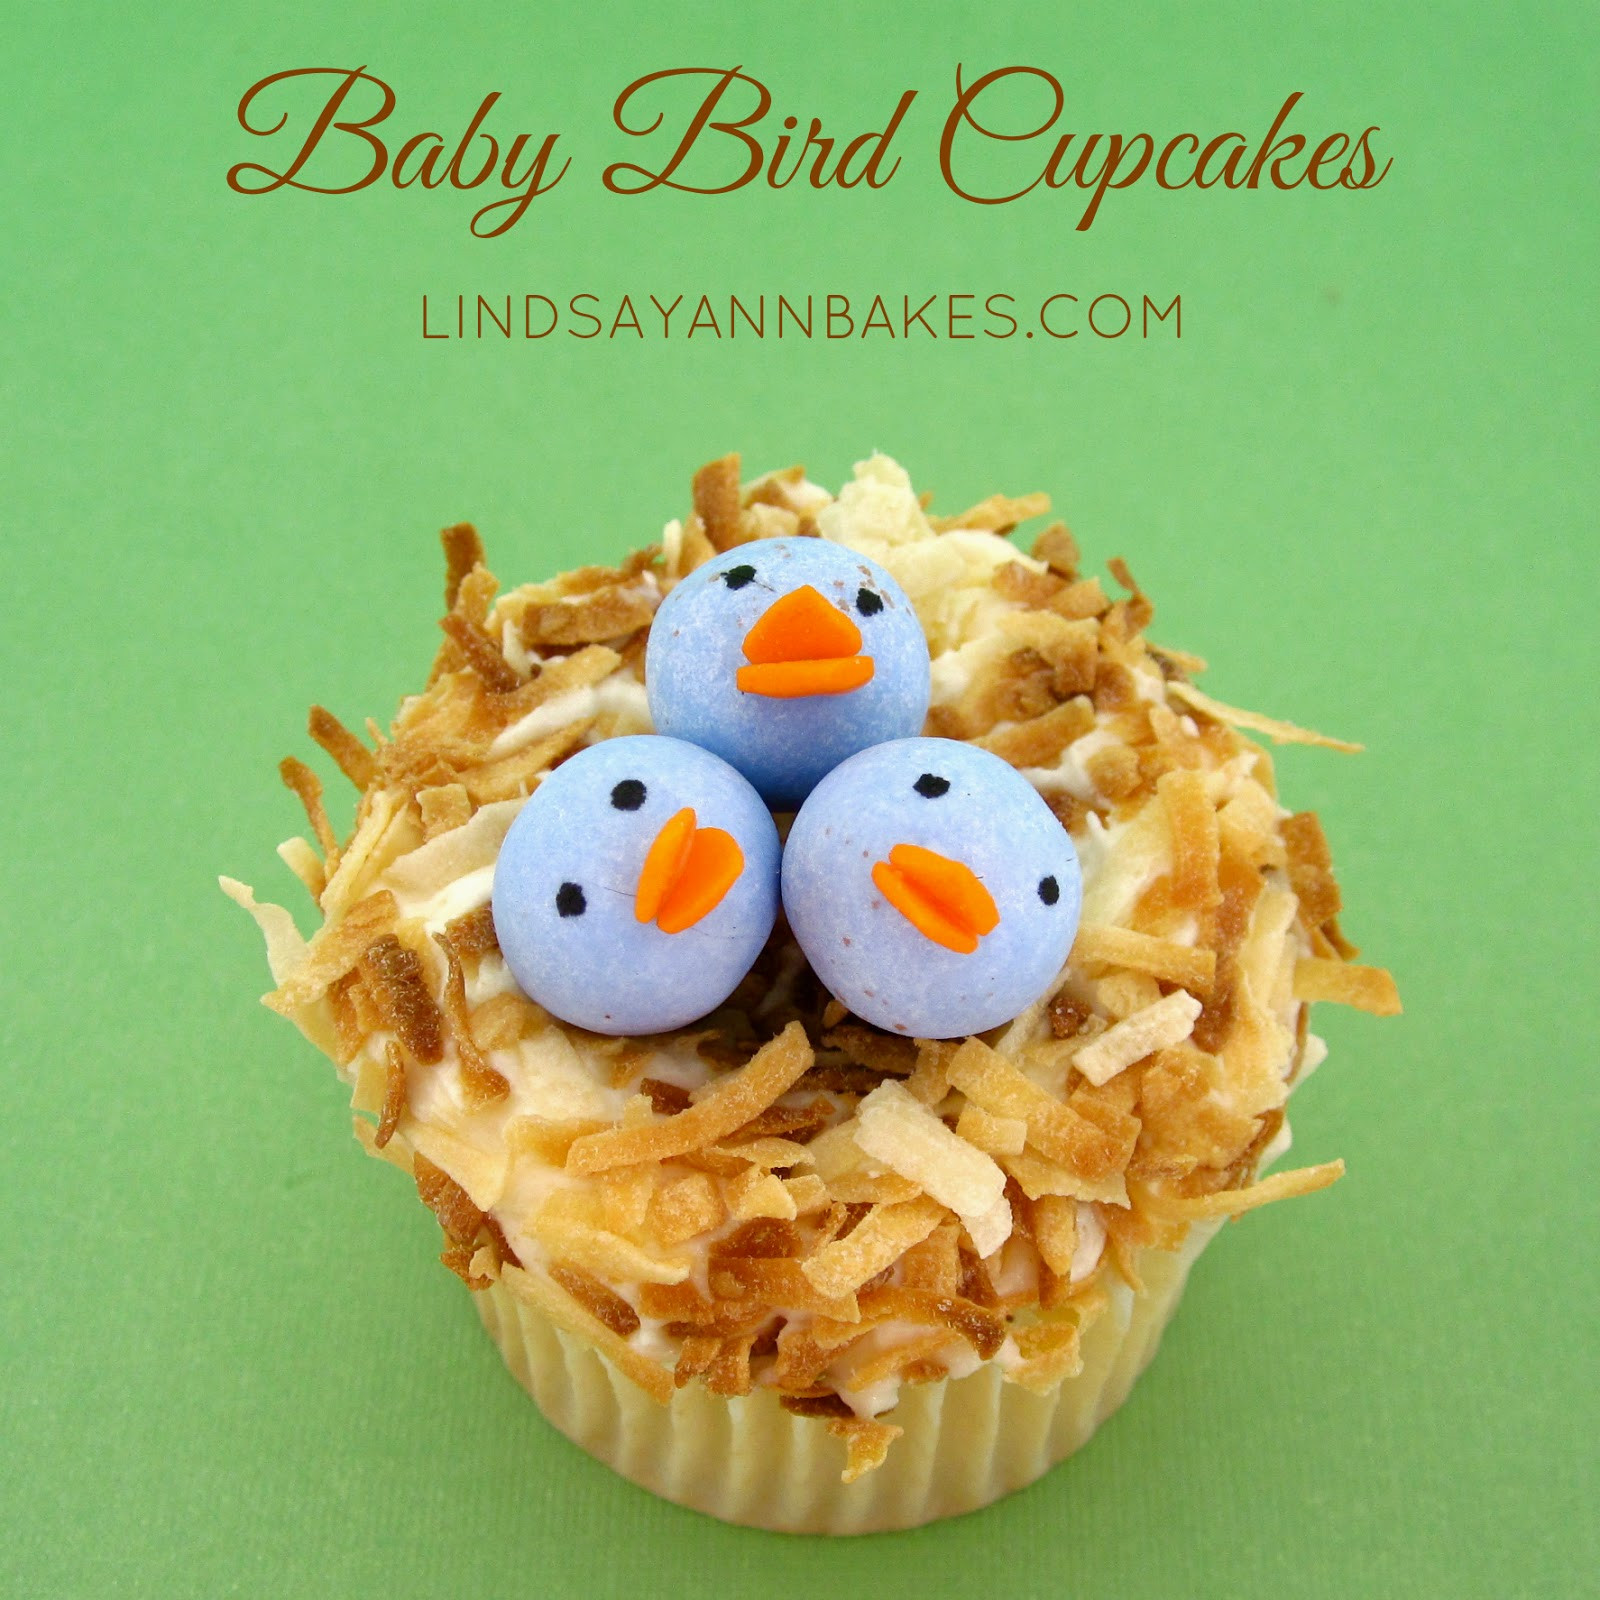 Baby Bird Food Recipe
 Baby Bird Cupcakes Lindsay Ann Bakes